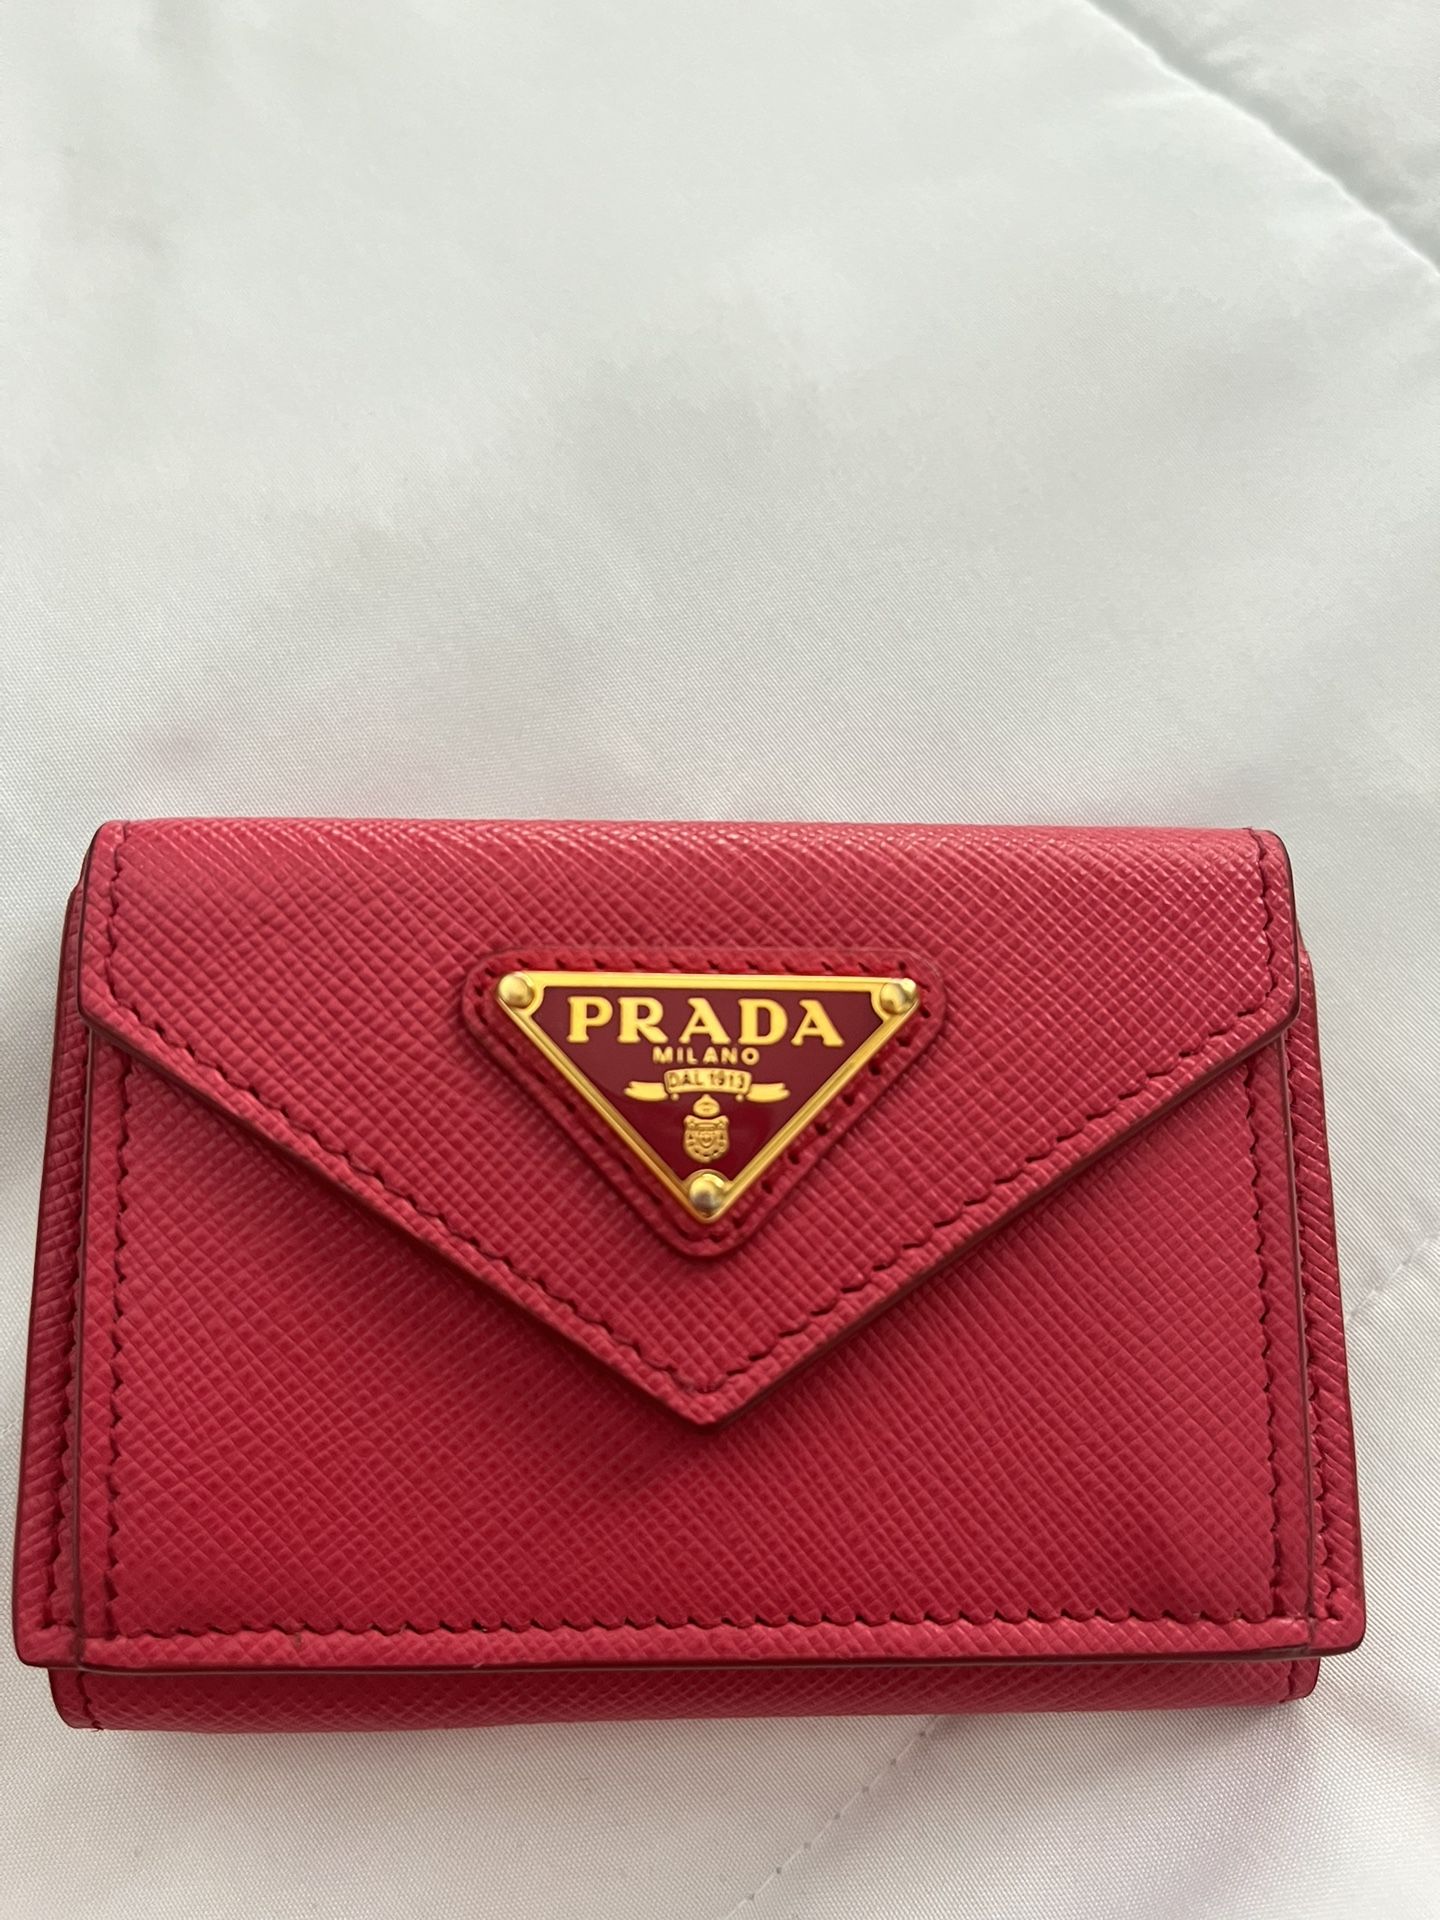 Prada Small Saffiano Leather Wallet 